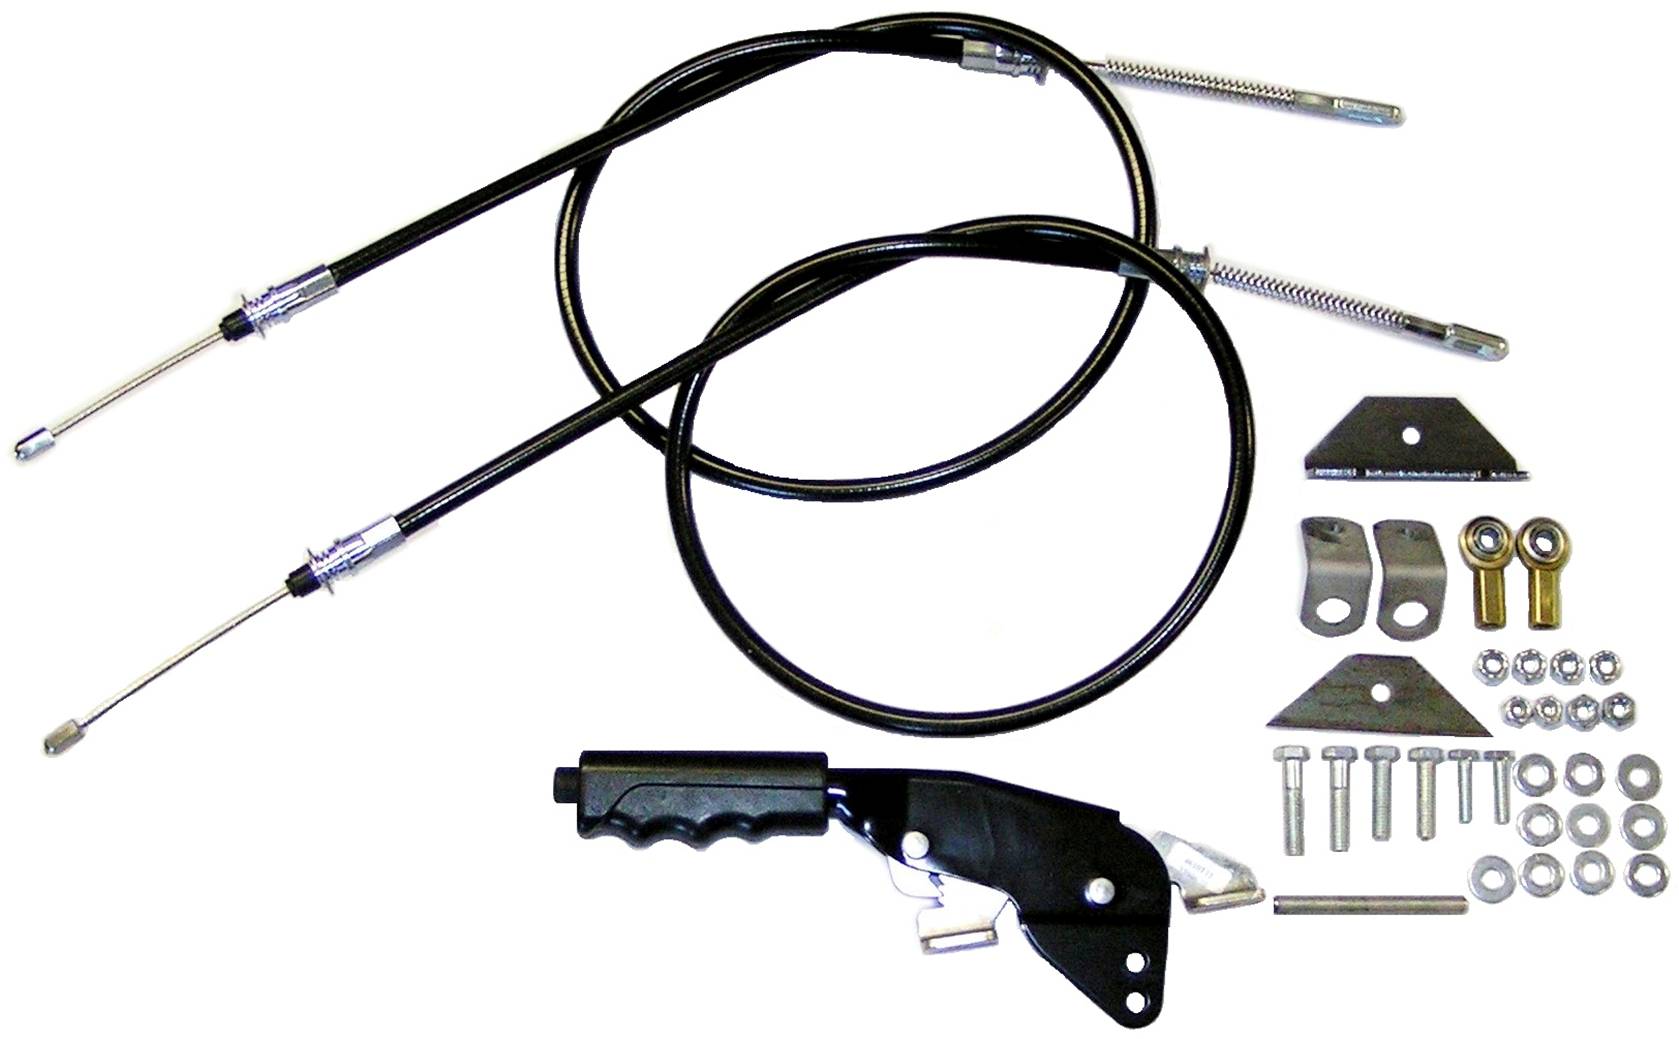 Handbrake Chrome handle complete cable kit